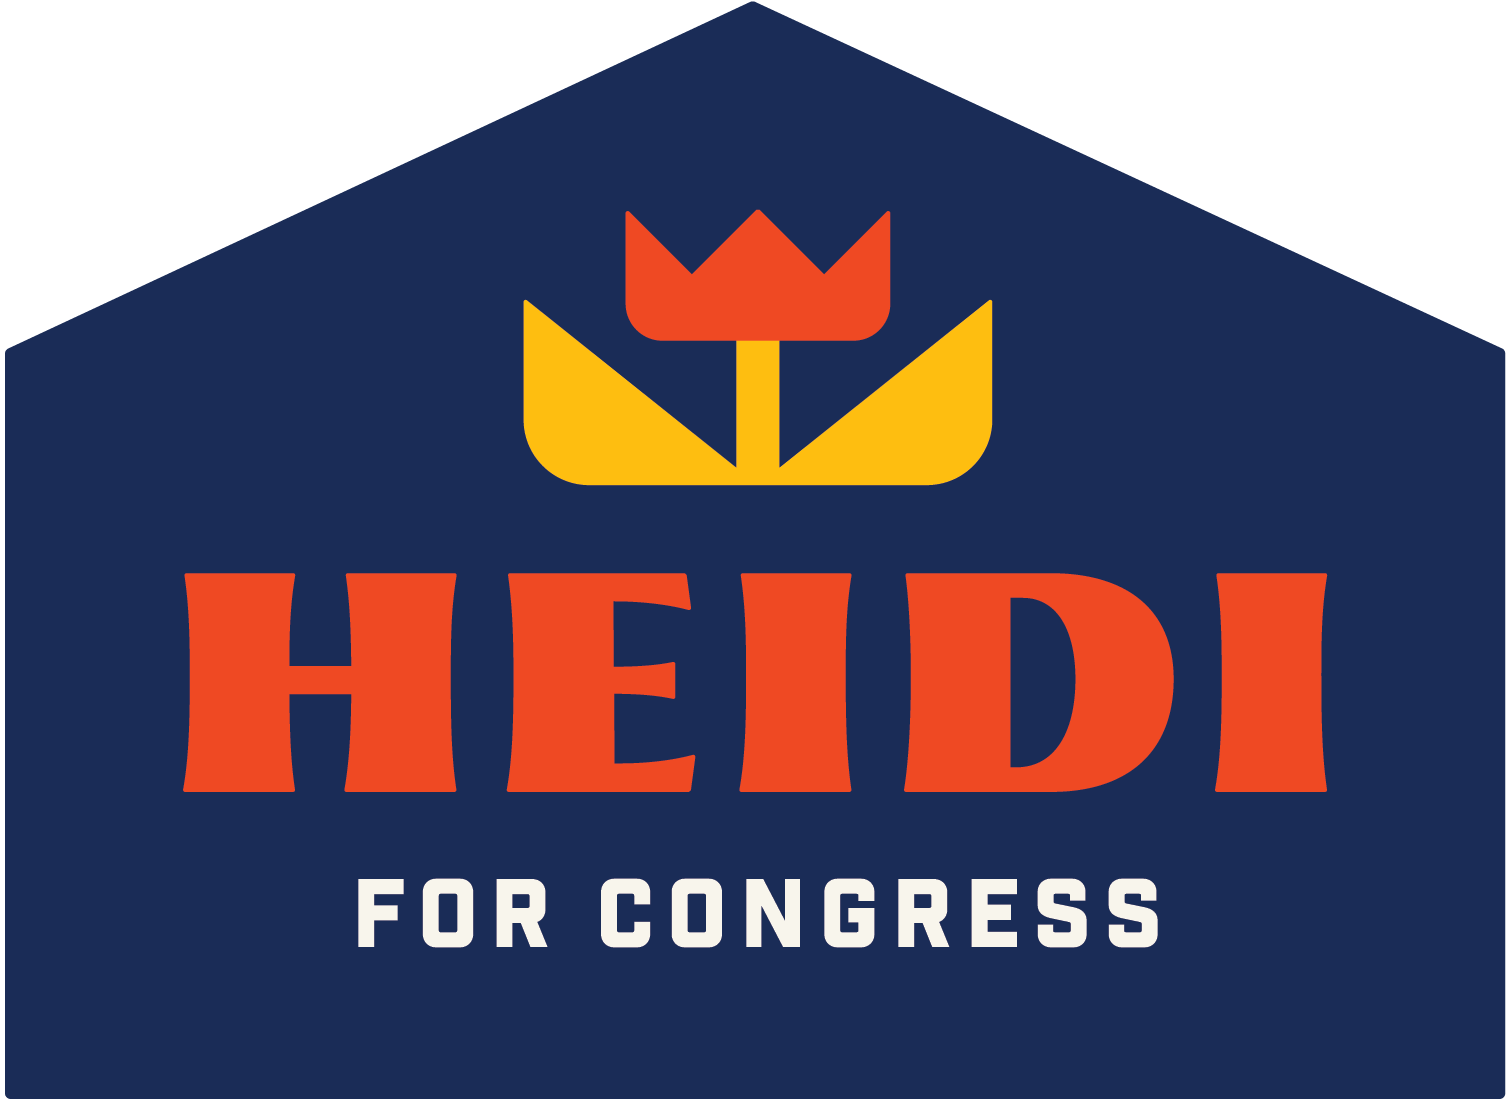 Heidi for Congress